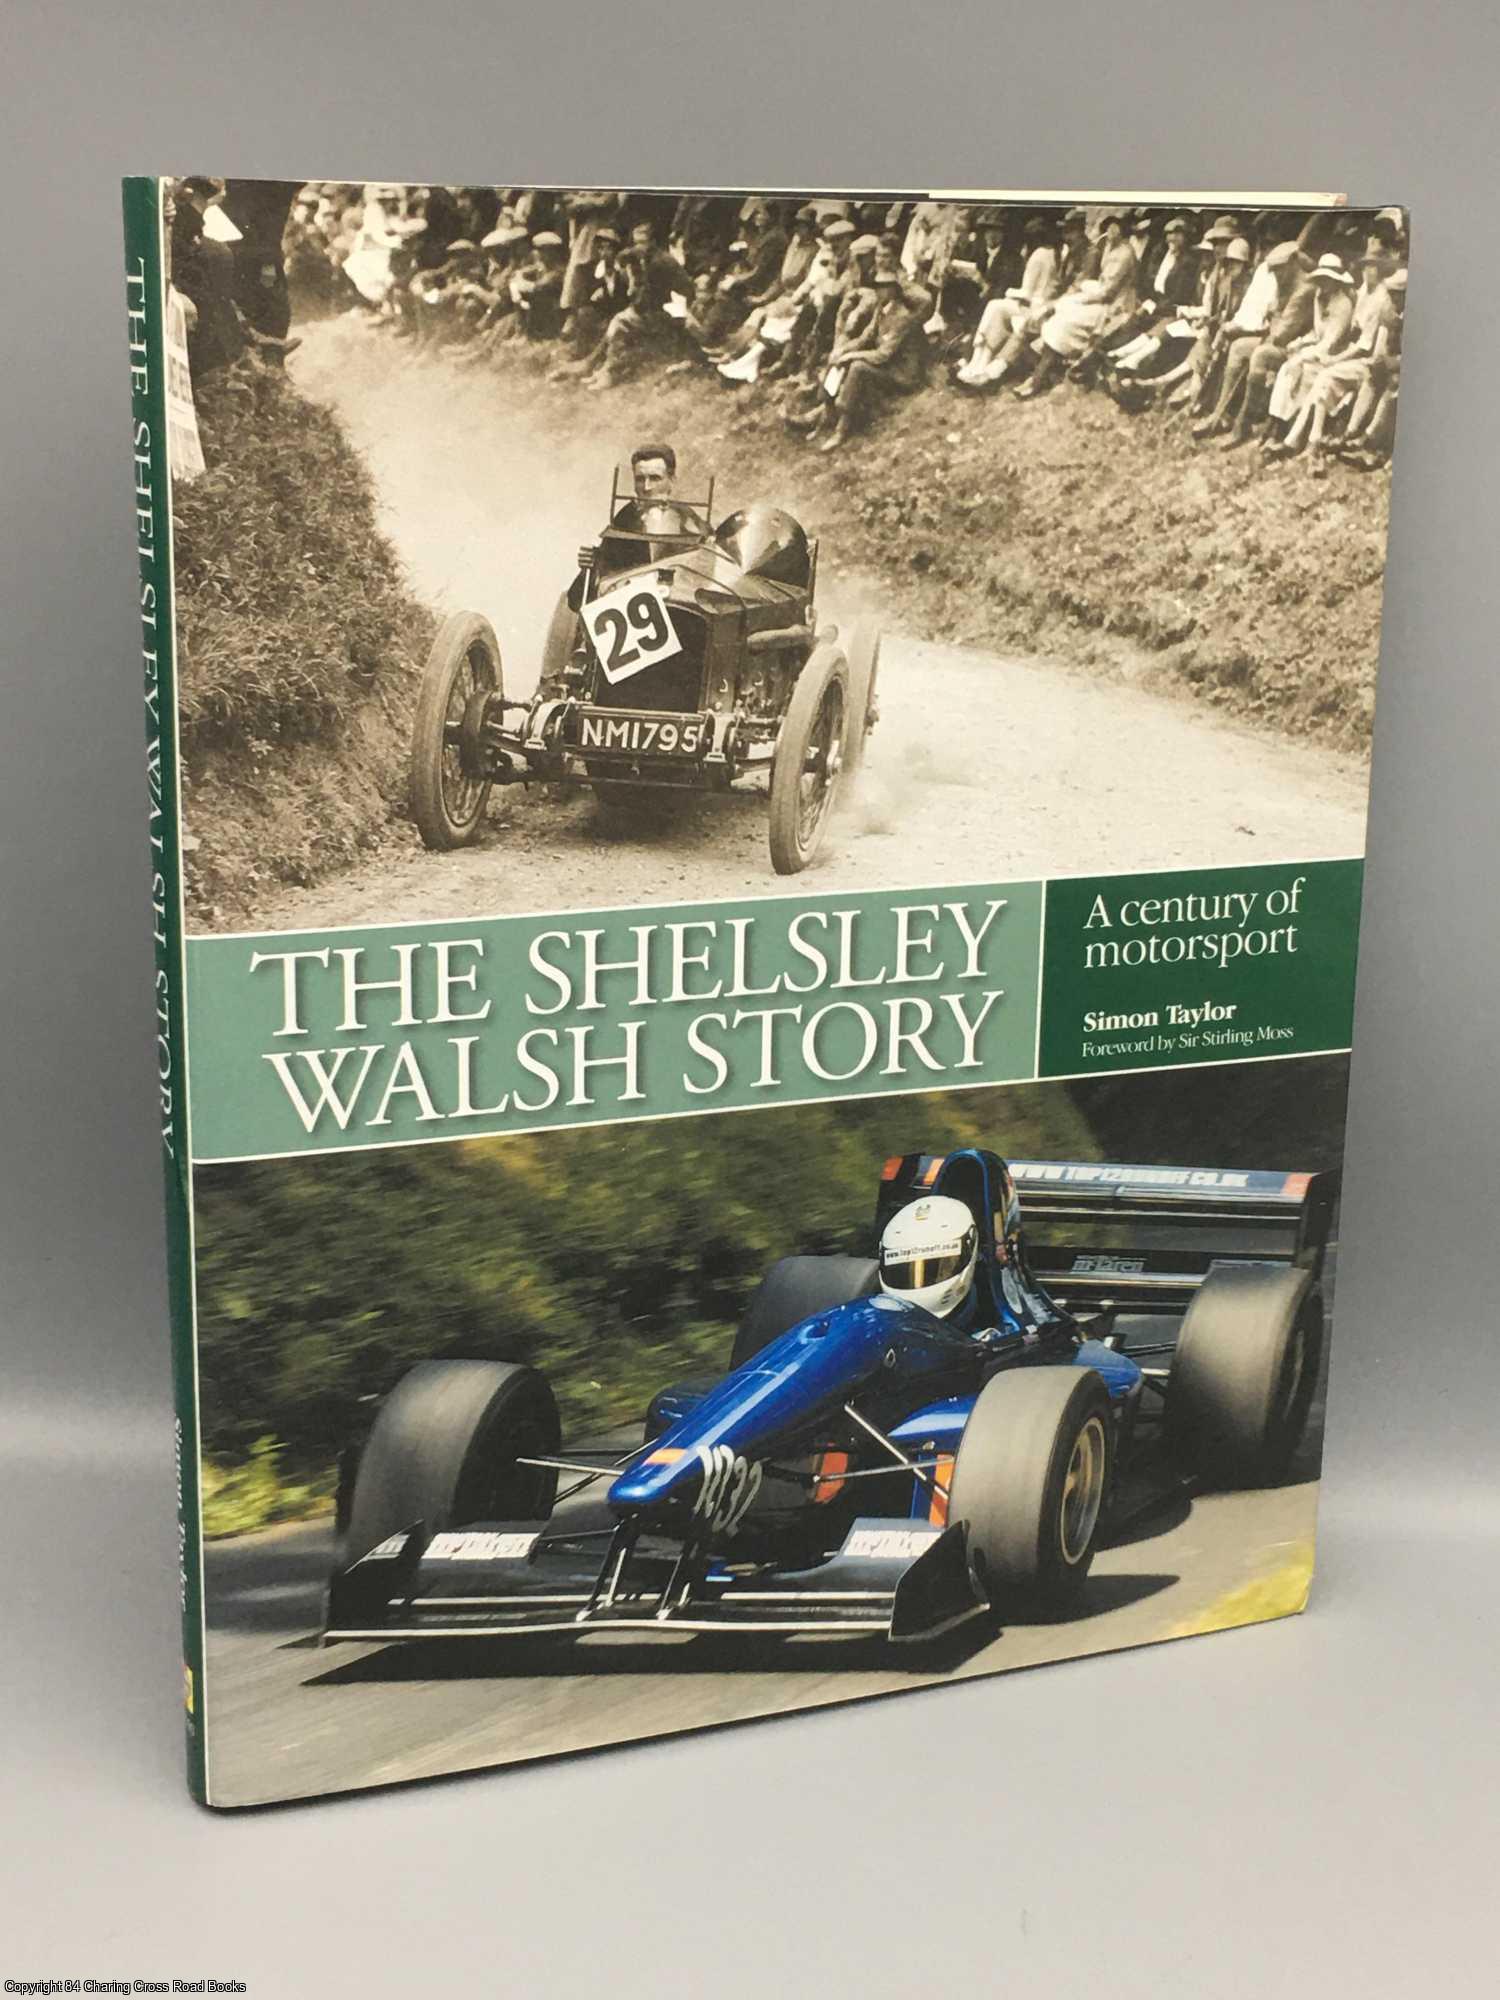 Taylor, Simon - The Shelsley Walsh story: a century of motorsport